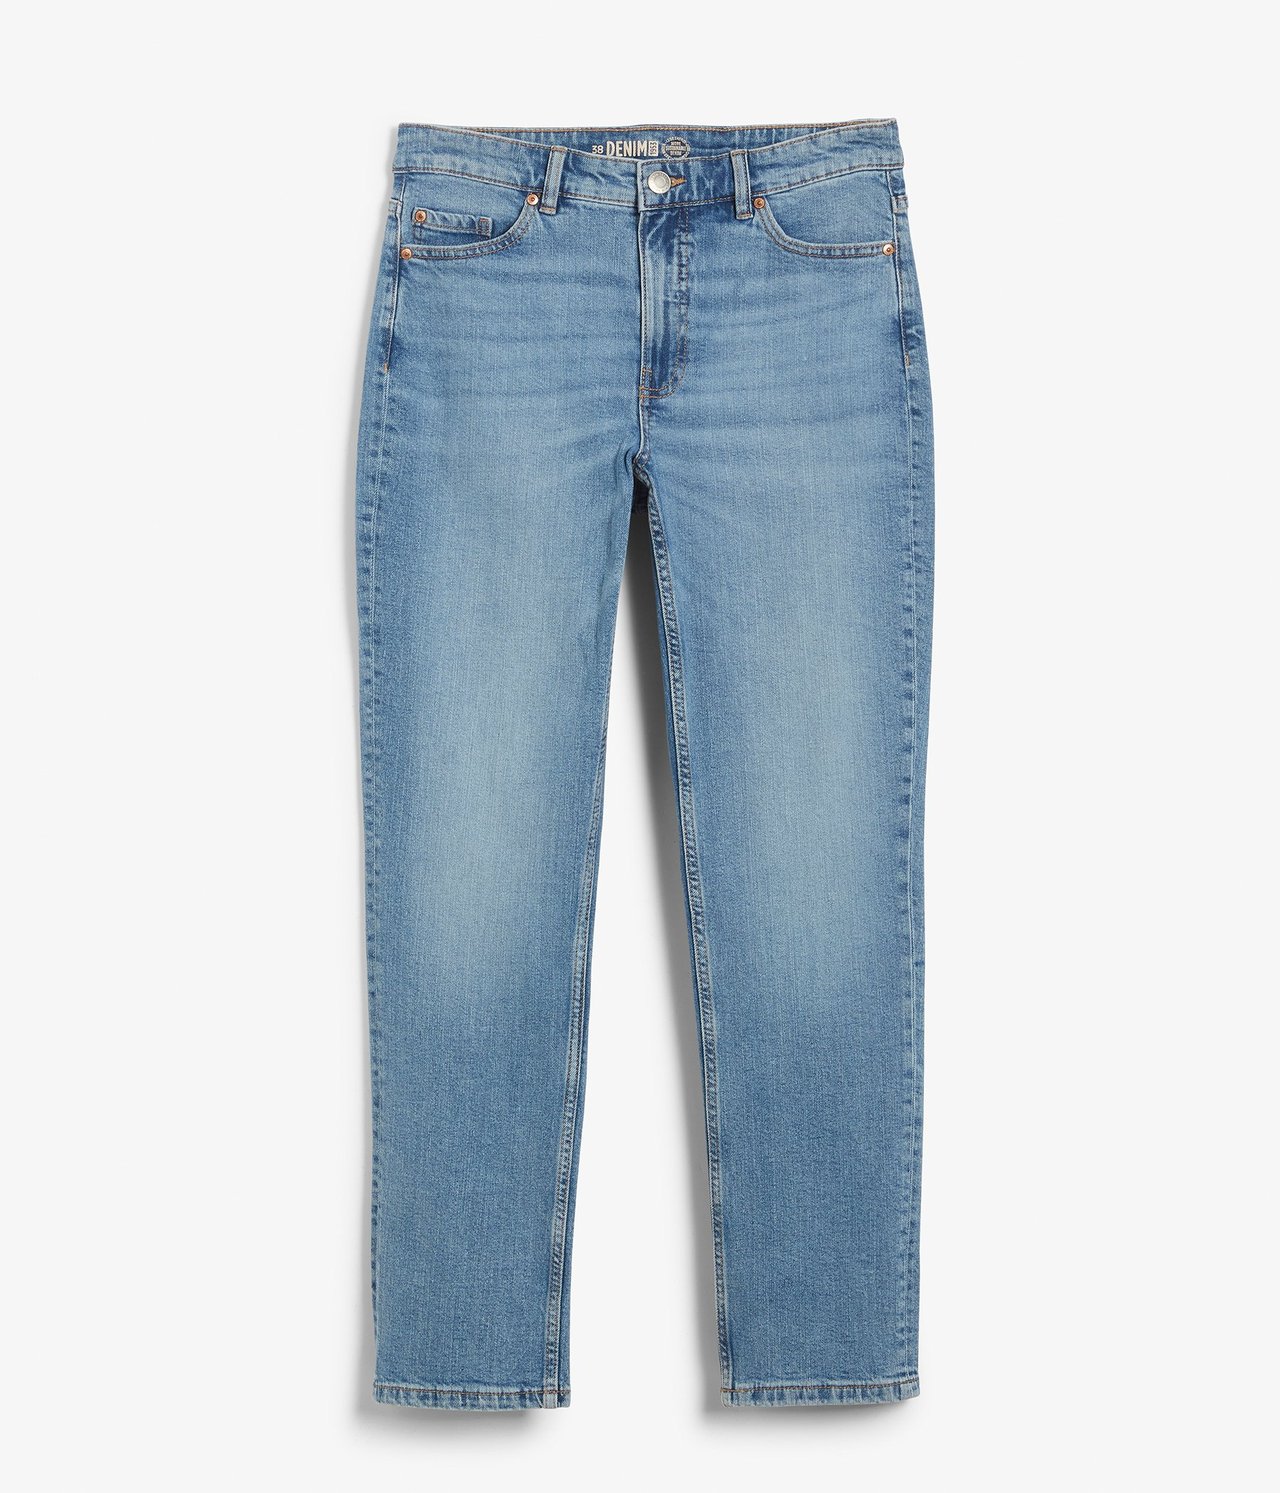 Jeans high waist tapered Lys denim - 34 - 1